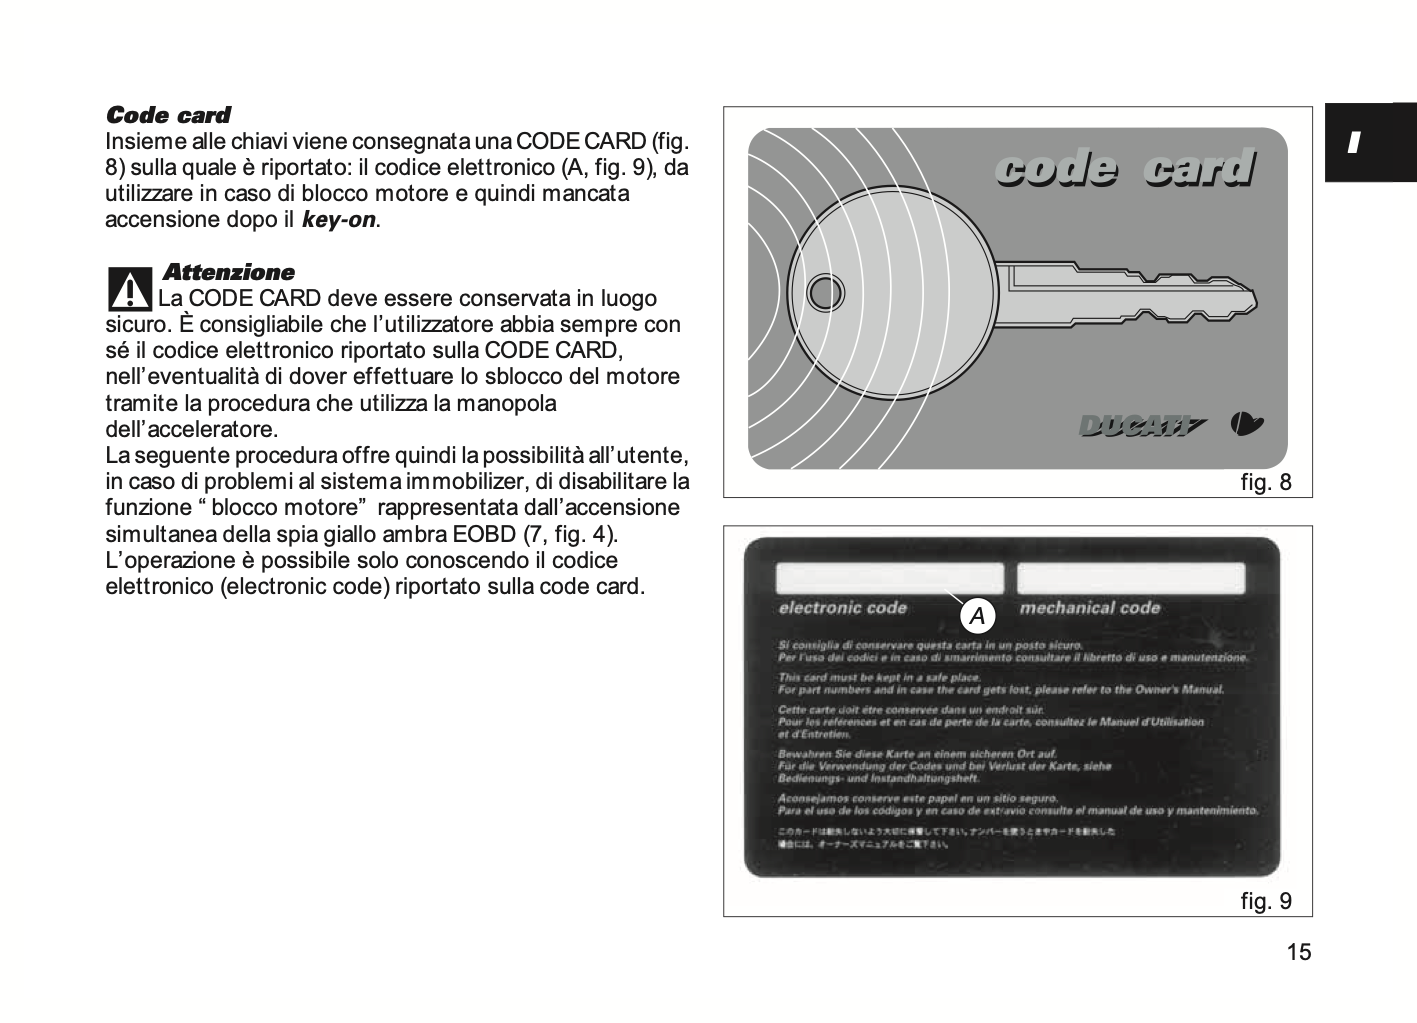 2006-2008 Ducati Sport1000 Owner's Manual | English